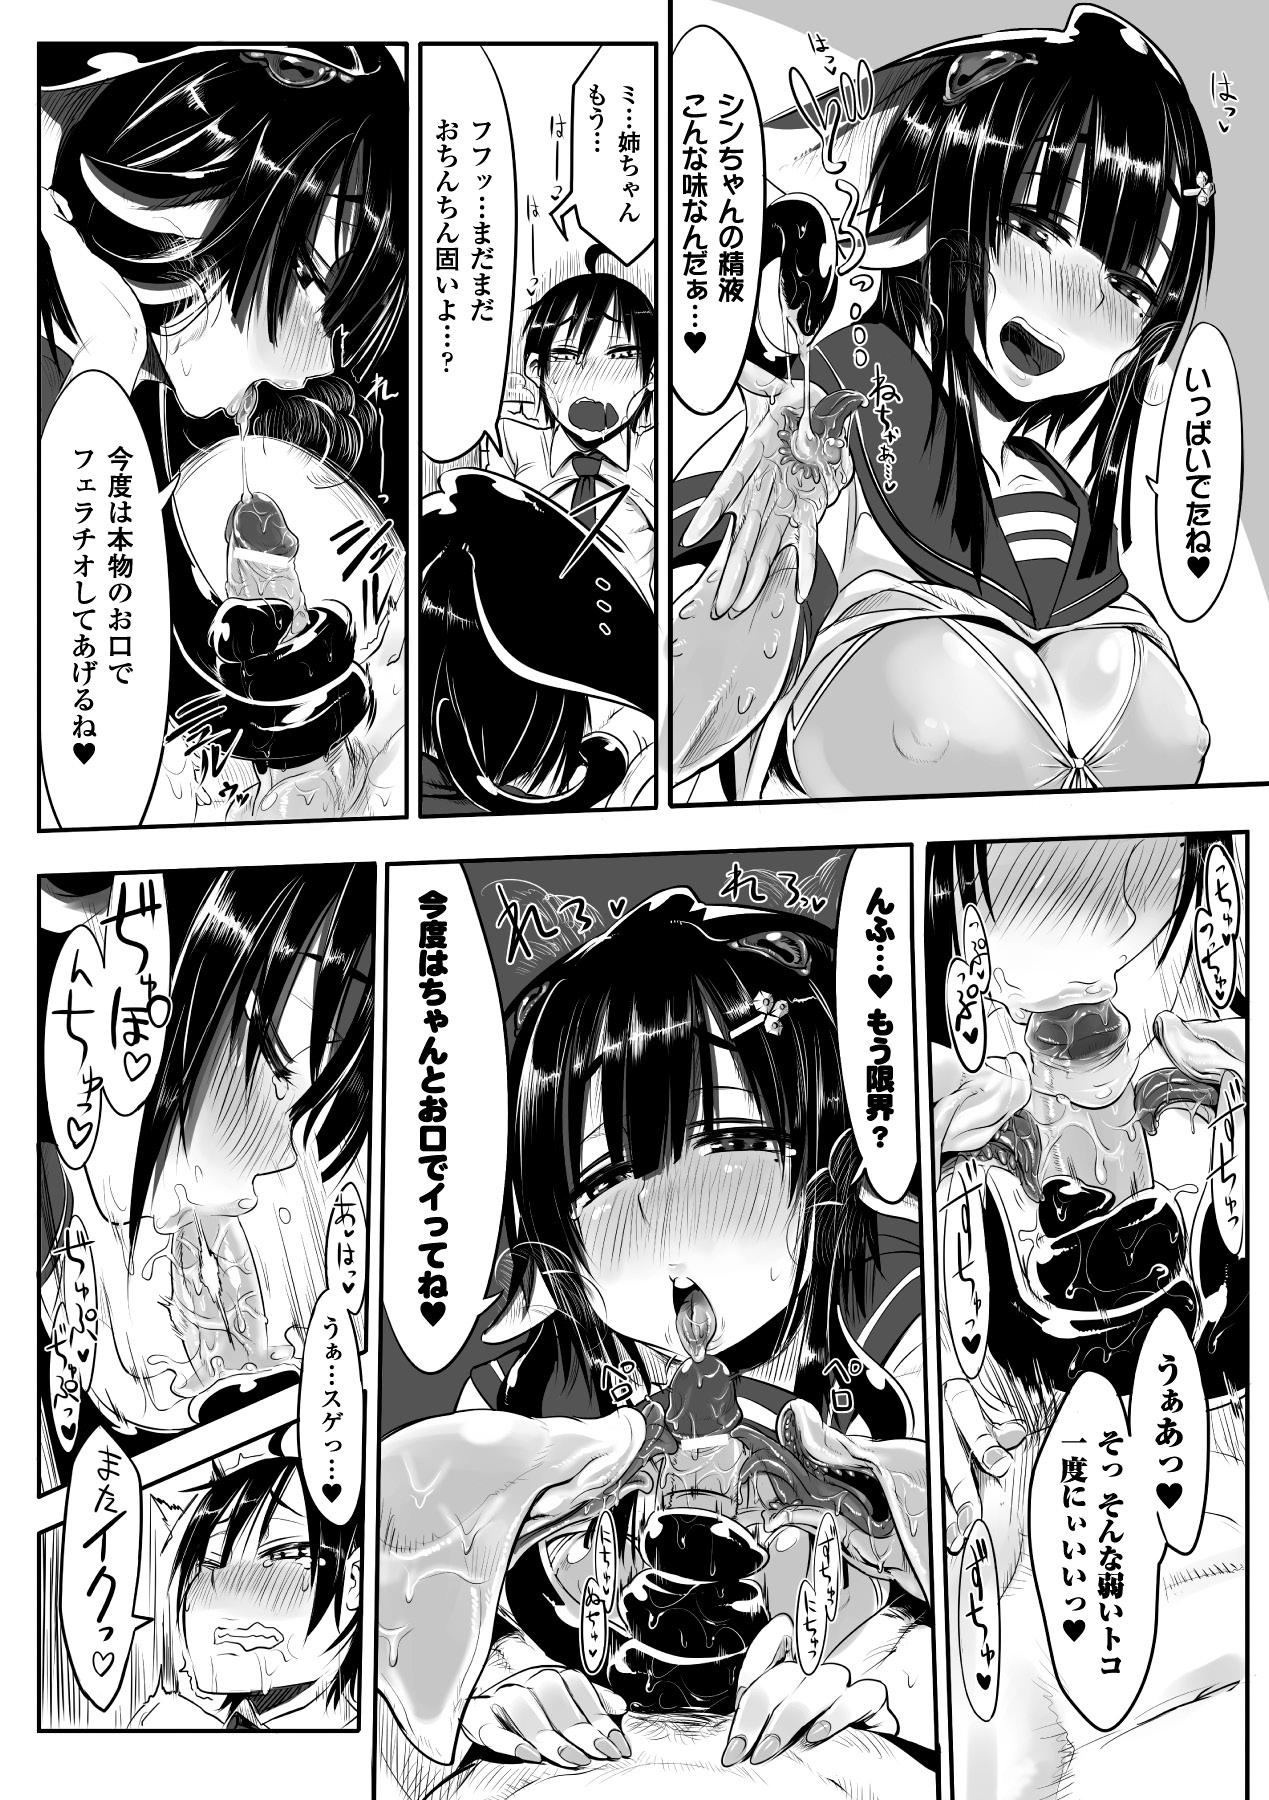 Femboy Bessatsu Comic Unreal Monster Musume Paradise Vol. 4 Story - Page 10